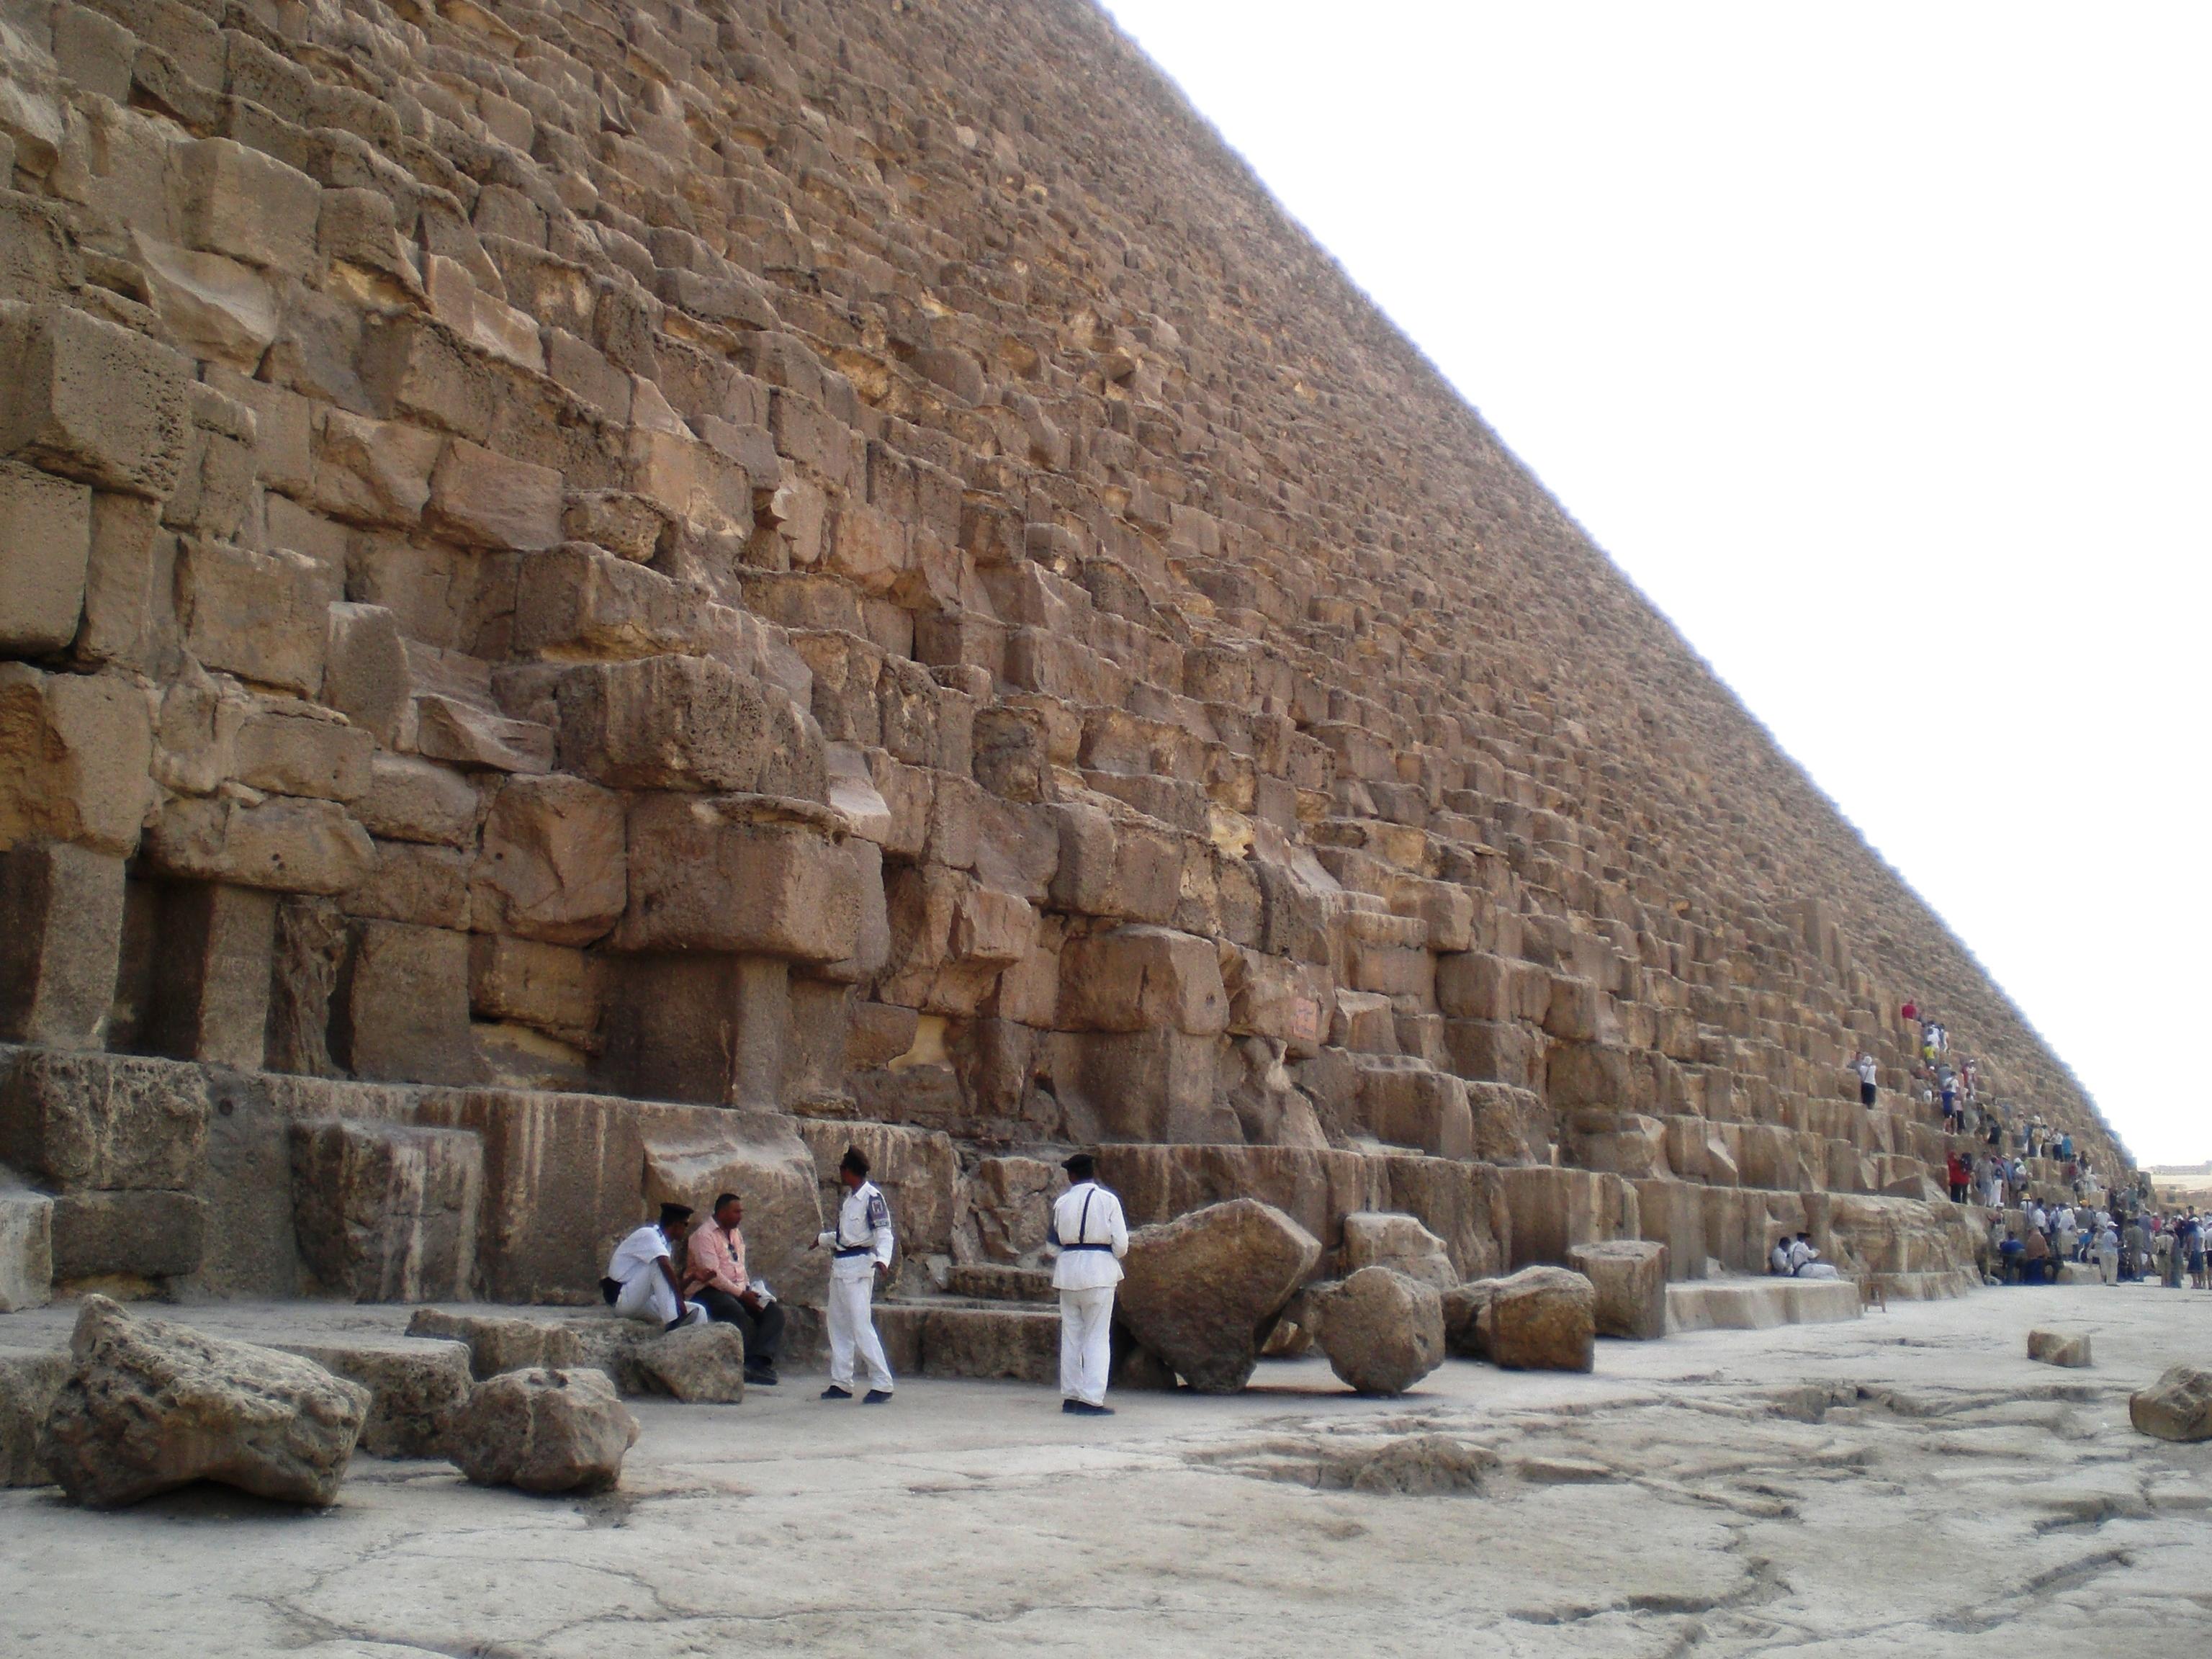 пирамида обработка